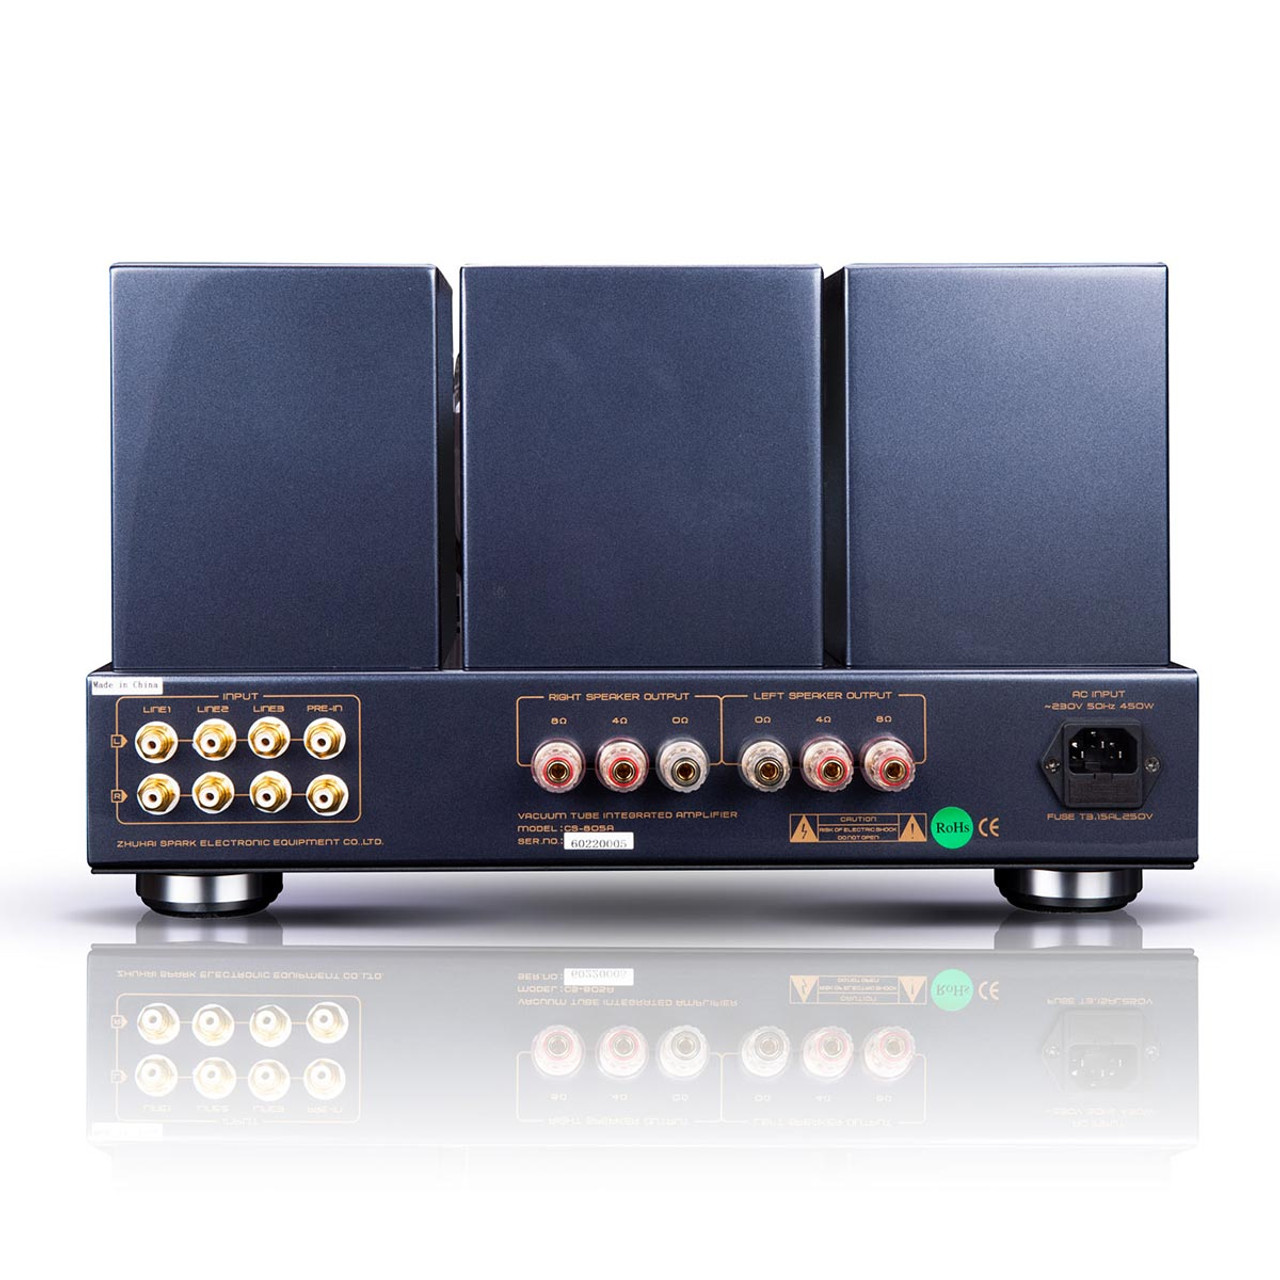 Cayin CS-805A SET Stereo Integrated Valve Amplifier